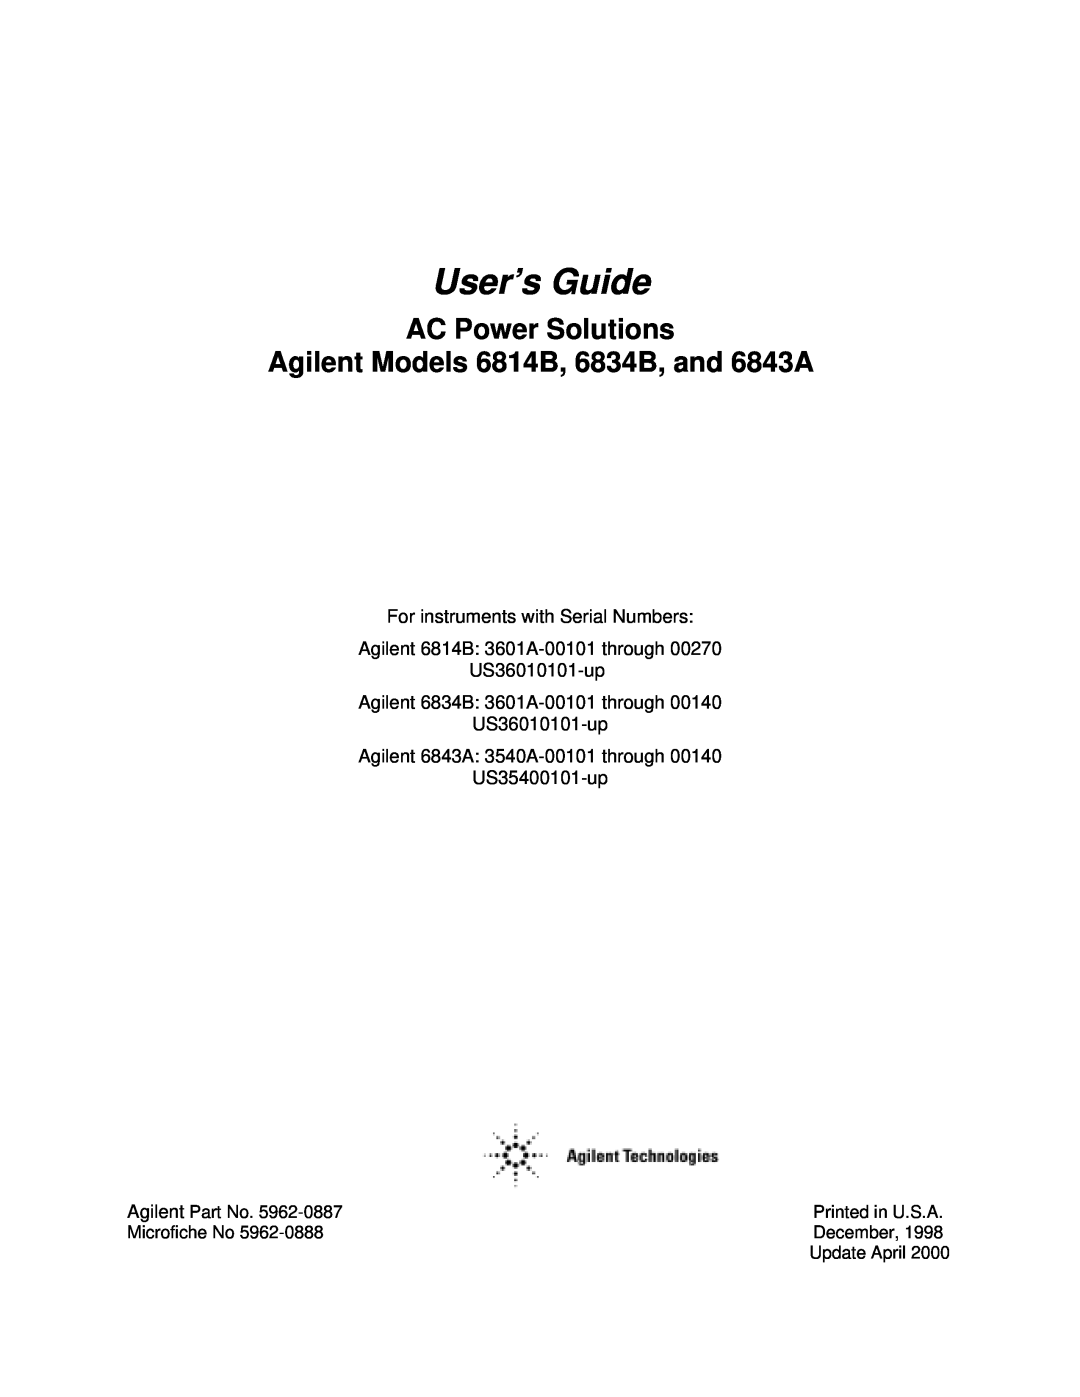 Agilent Technologies manual AC Power Solutions, Agilent Models 6814B, 6834B, and 6843A, User’s Guide, Agilent Part No 